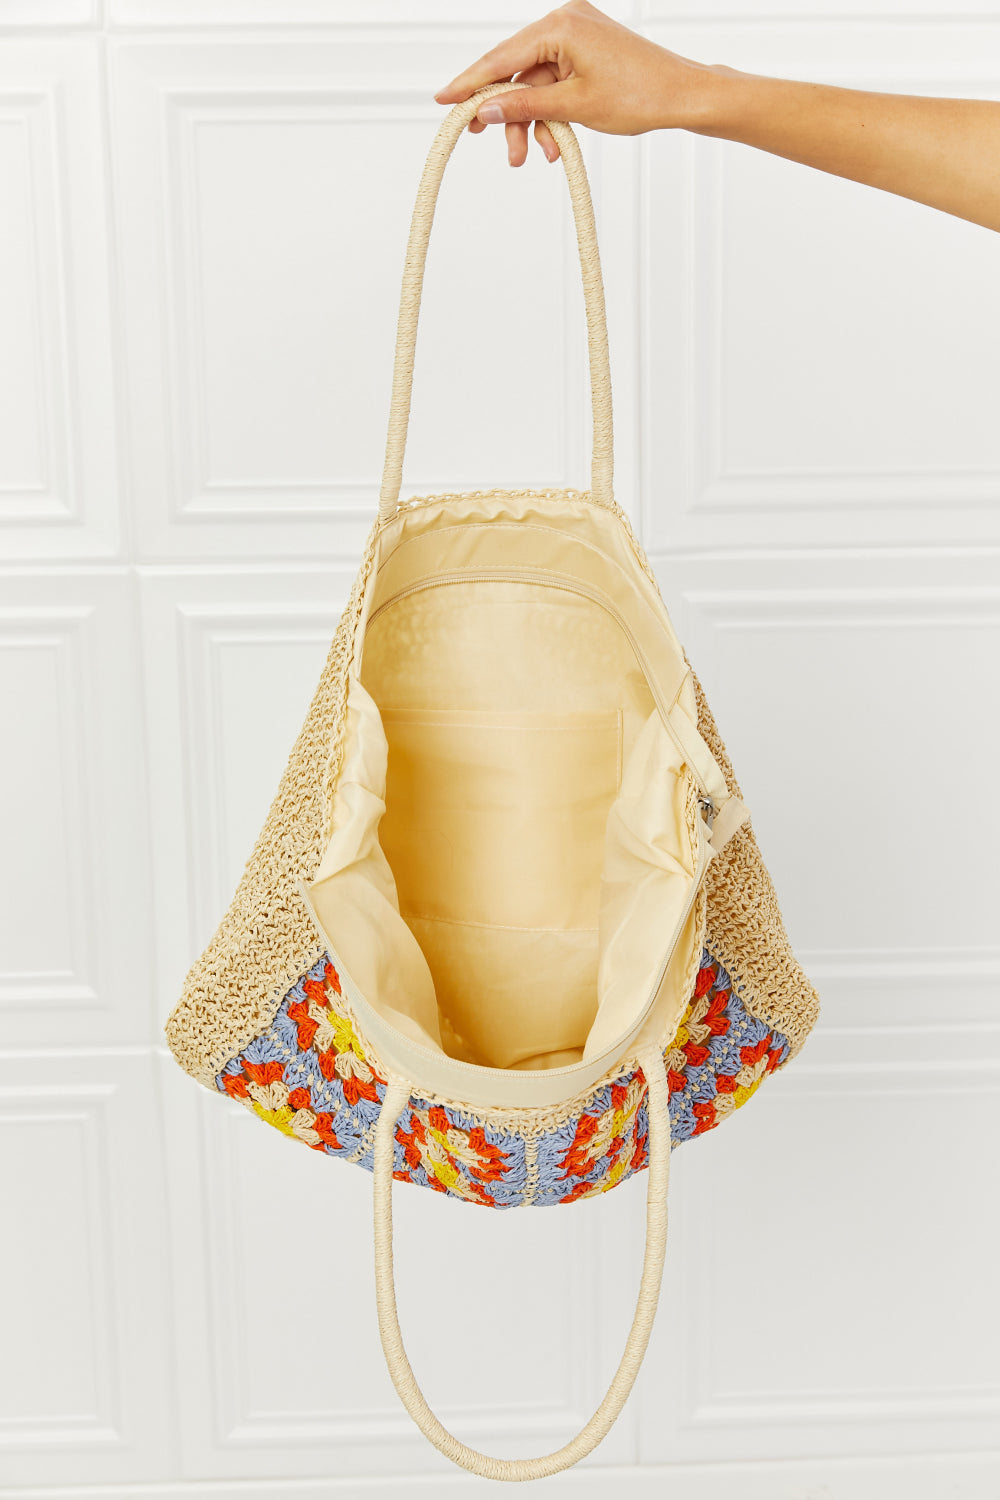 Fame Off The Coast Straw Tote Bag - Tigbul's Fashion